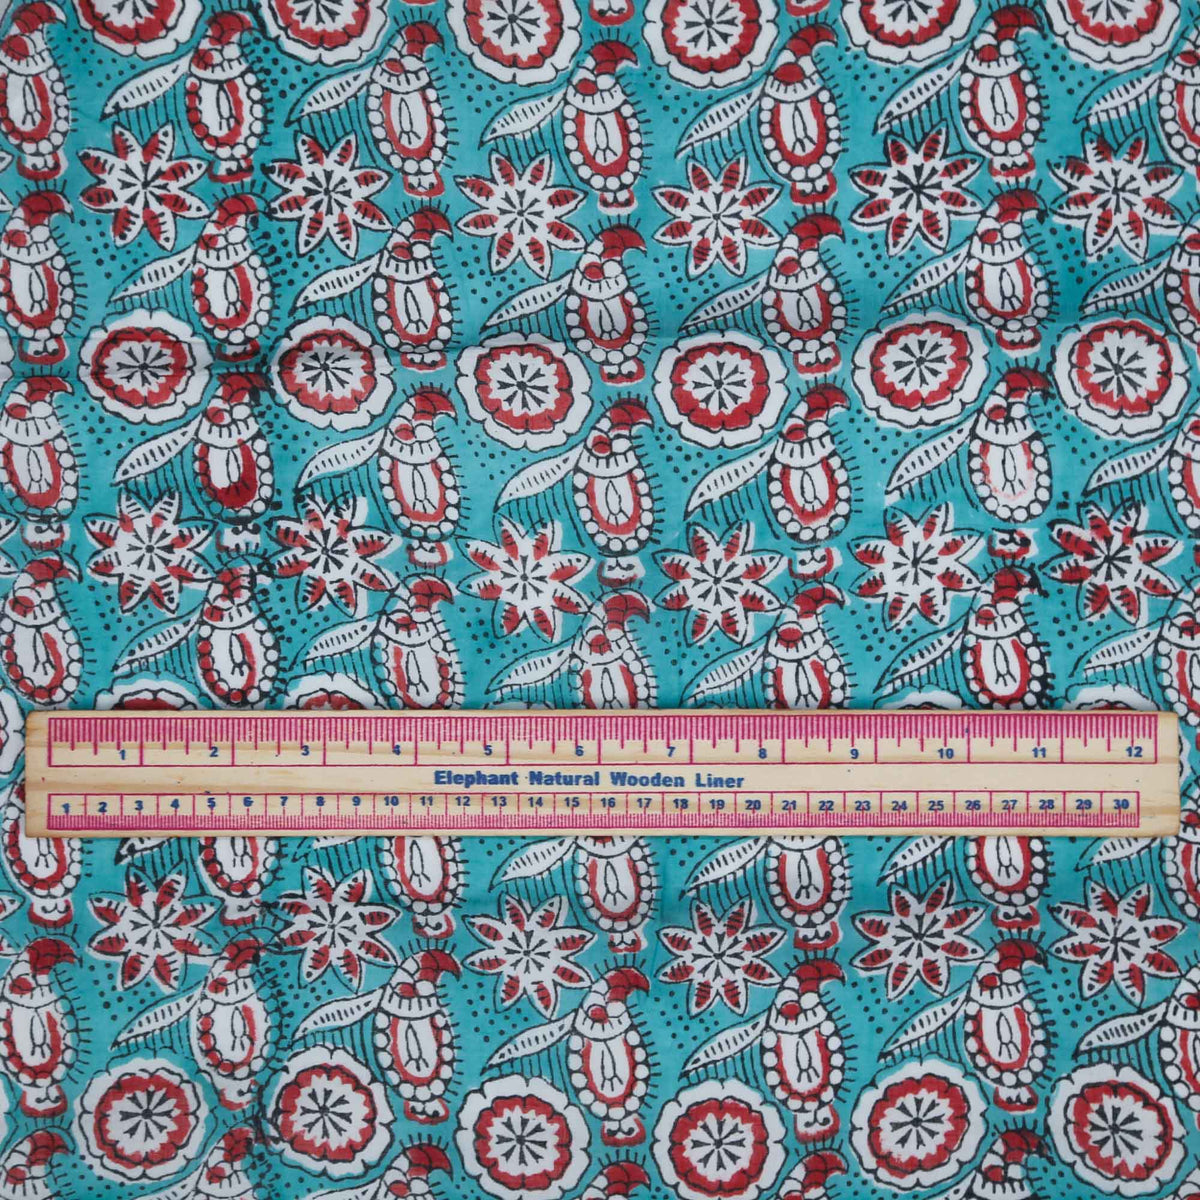 Block Print Fabric - Paisley Floral On Blue( Design 476)